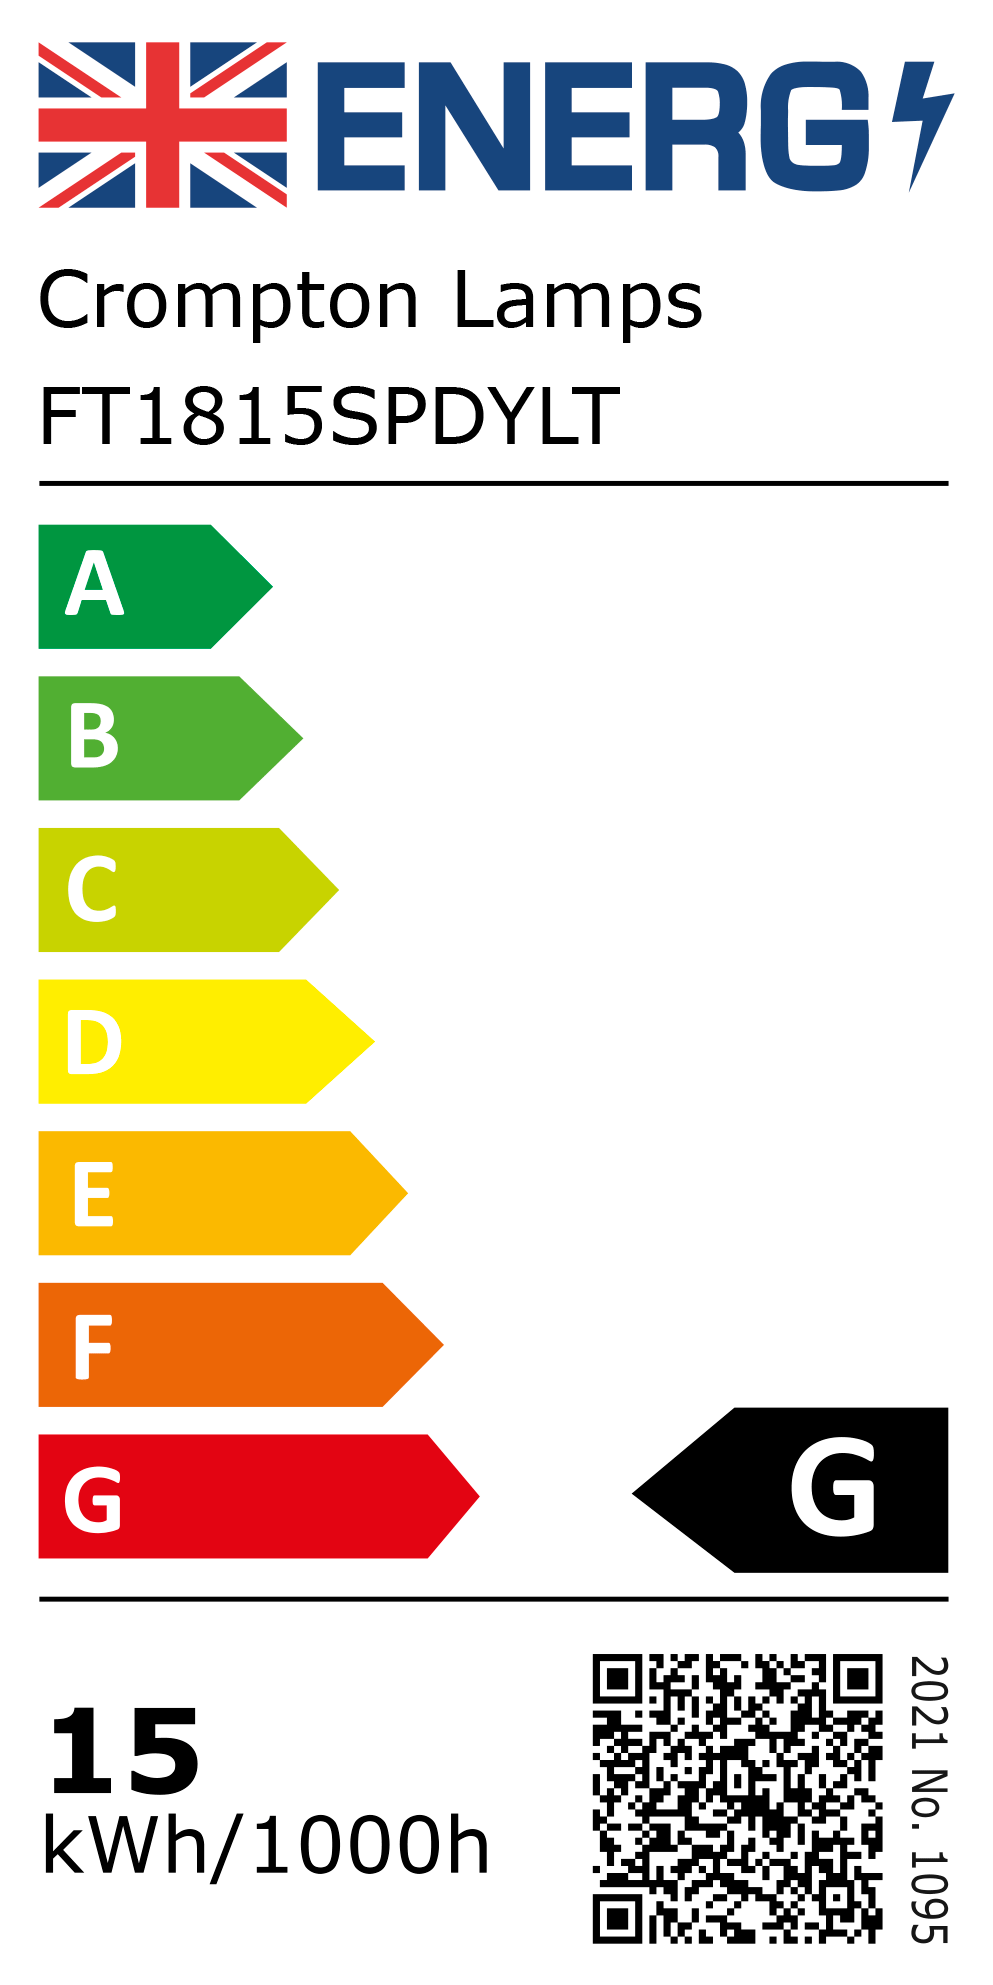 New 2021 Energy Rating Label: Stock Code FT1815SPDYLT